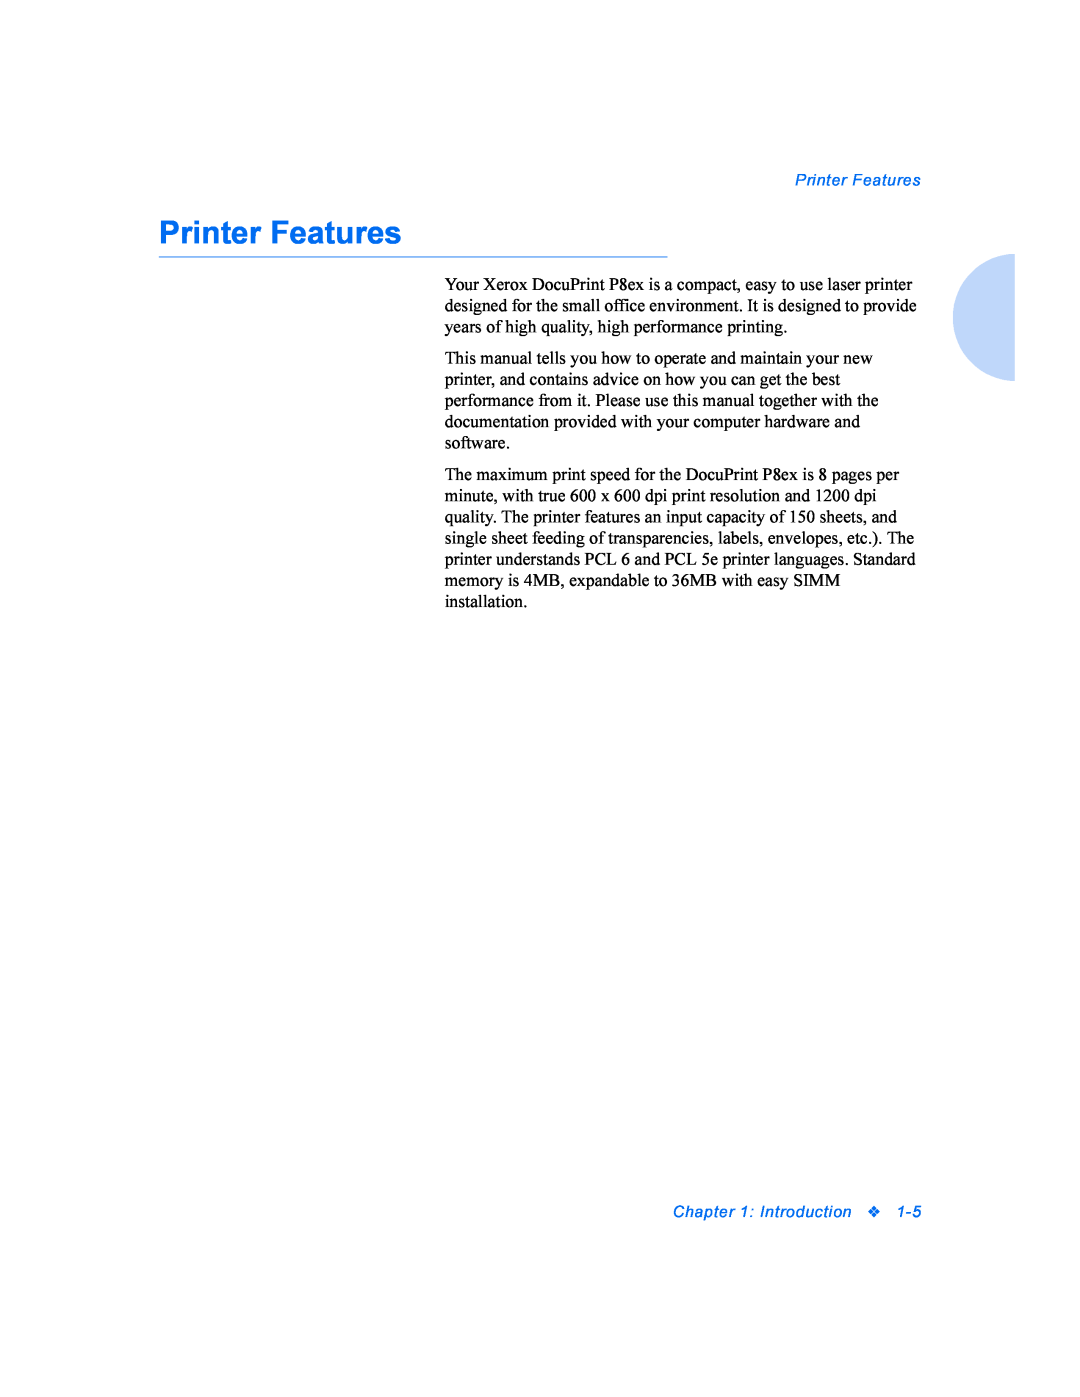 Xerox DocuPrint P8ex manual Printer Features, Introduction 